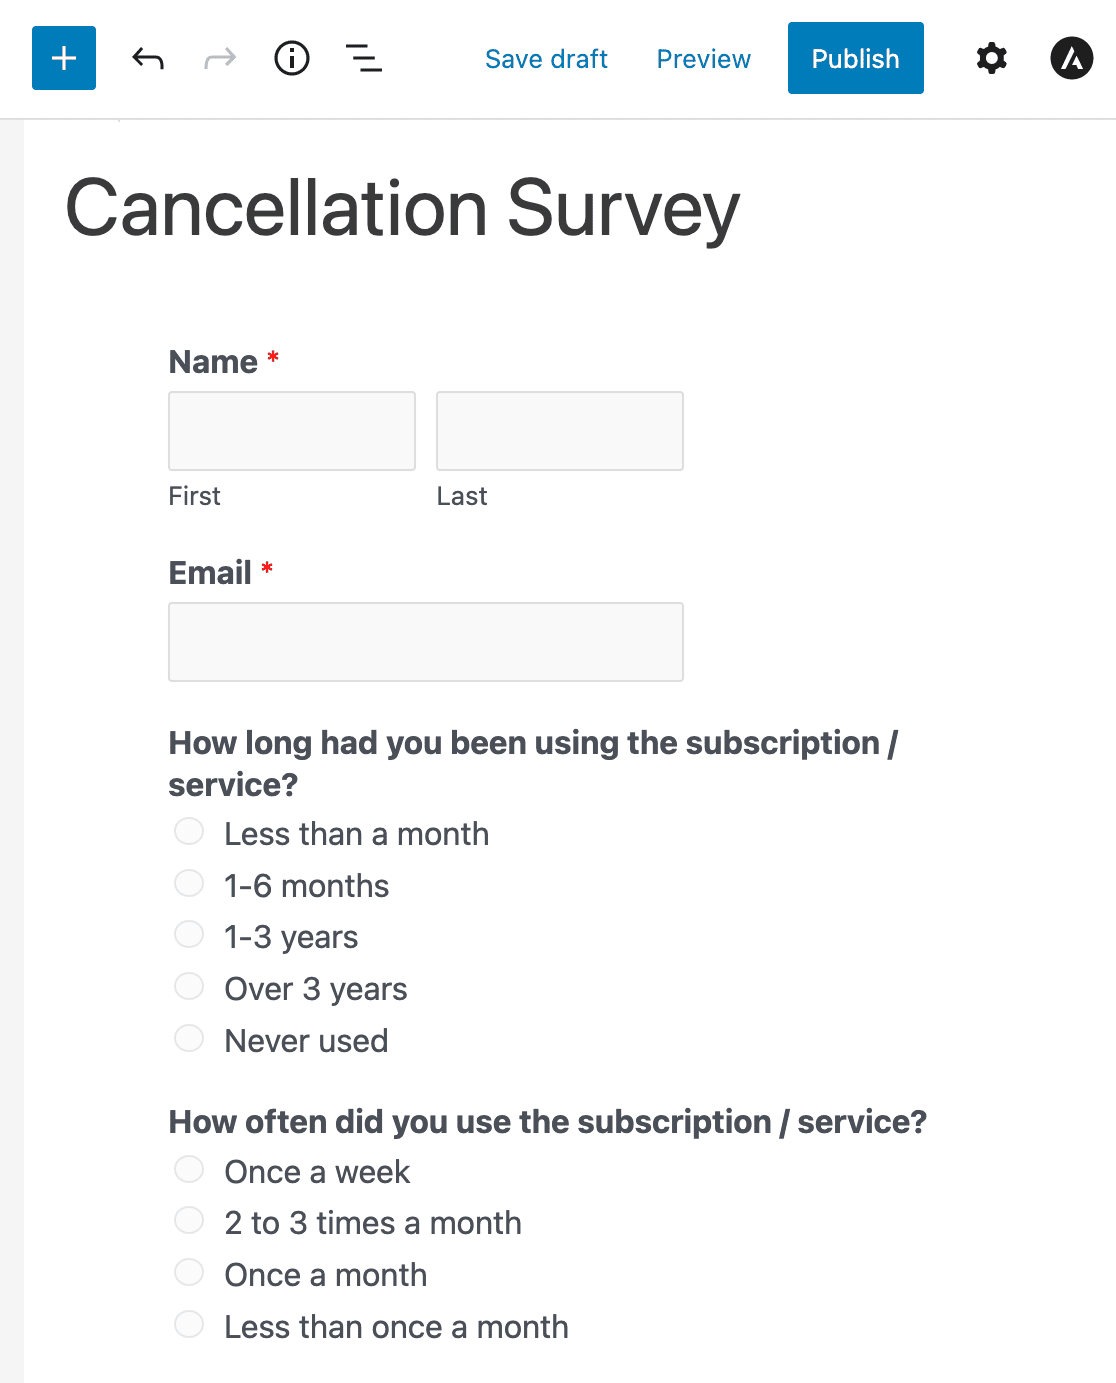 Publishing your cancellation survey form